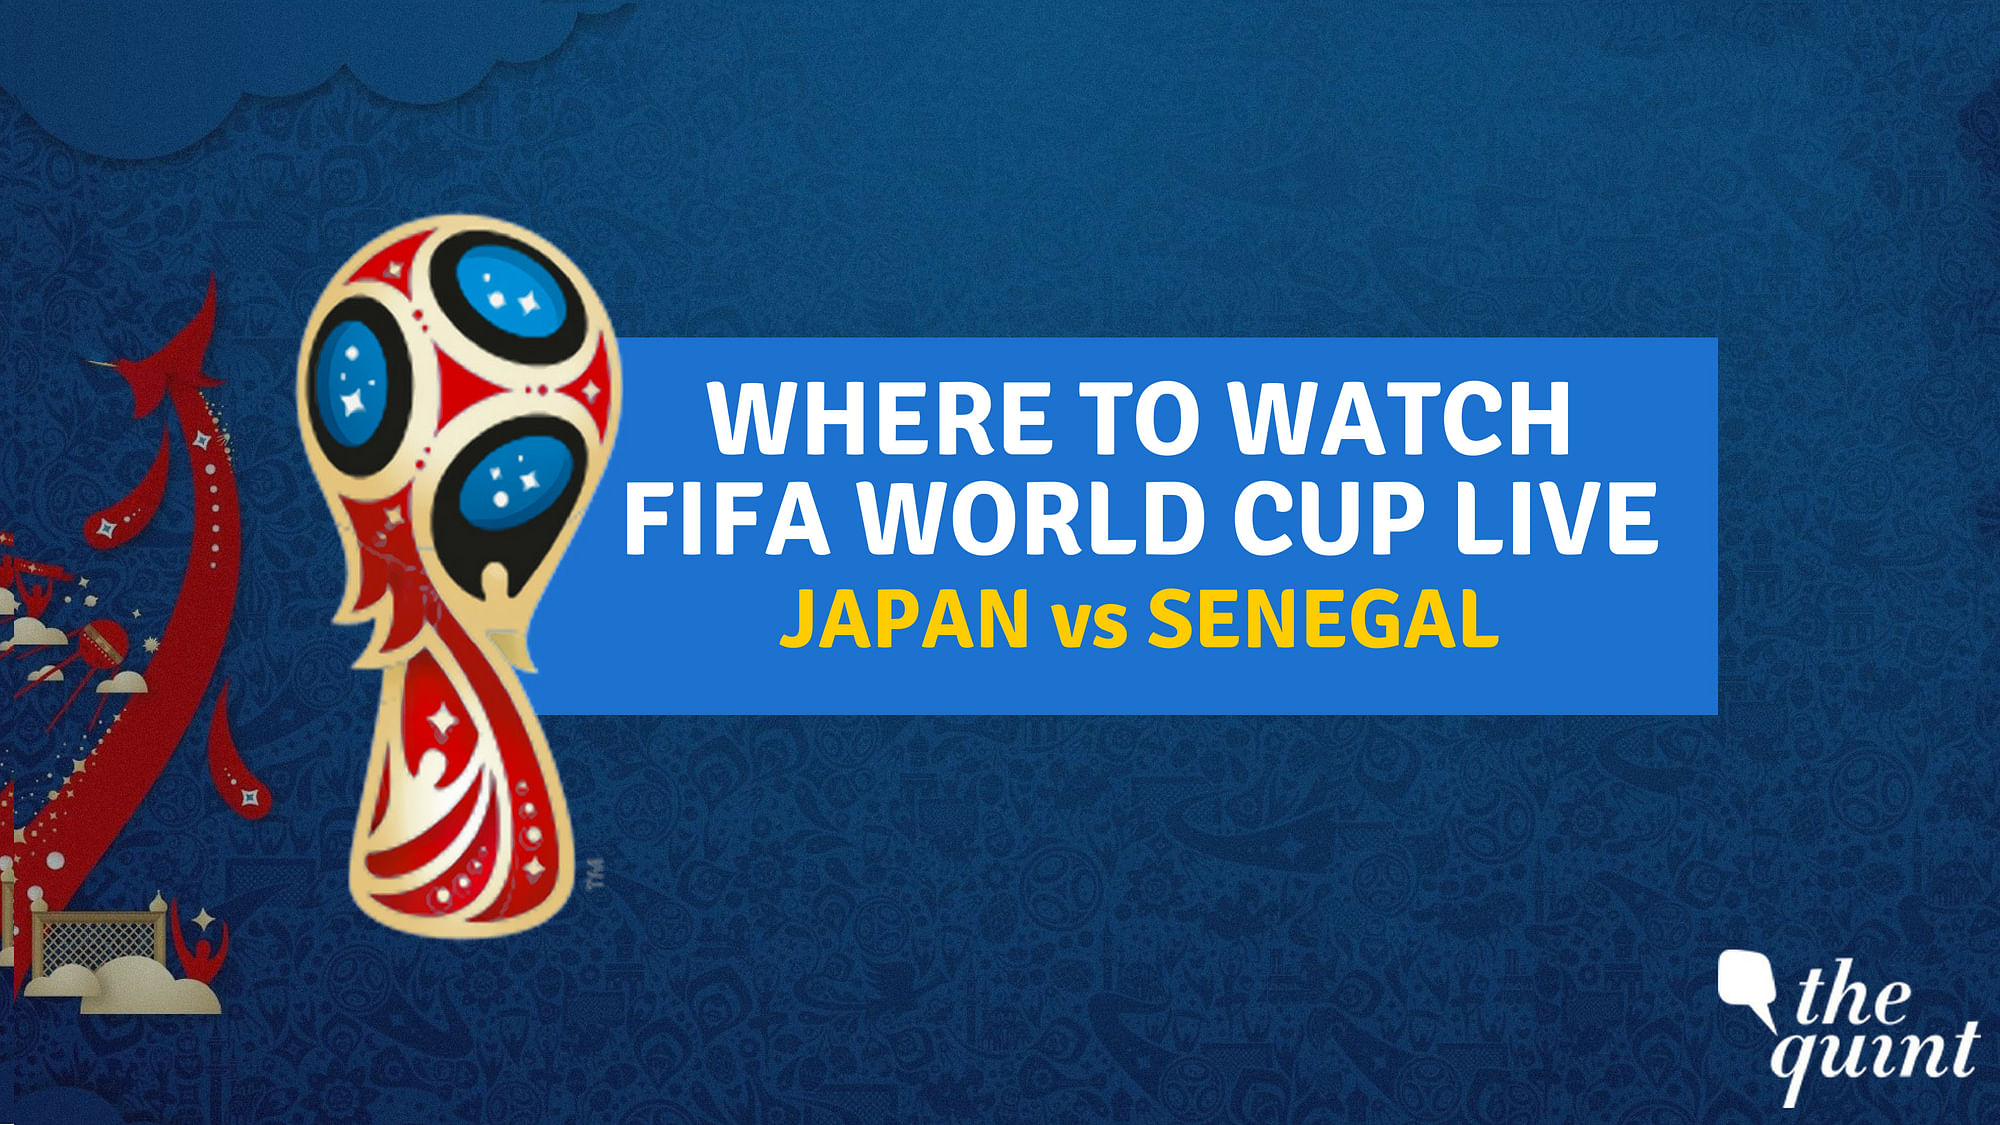 Japan vs Senegal Live Score FIFA World Cup 2018 Live Streaming